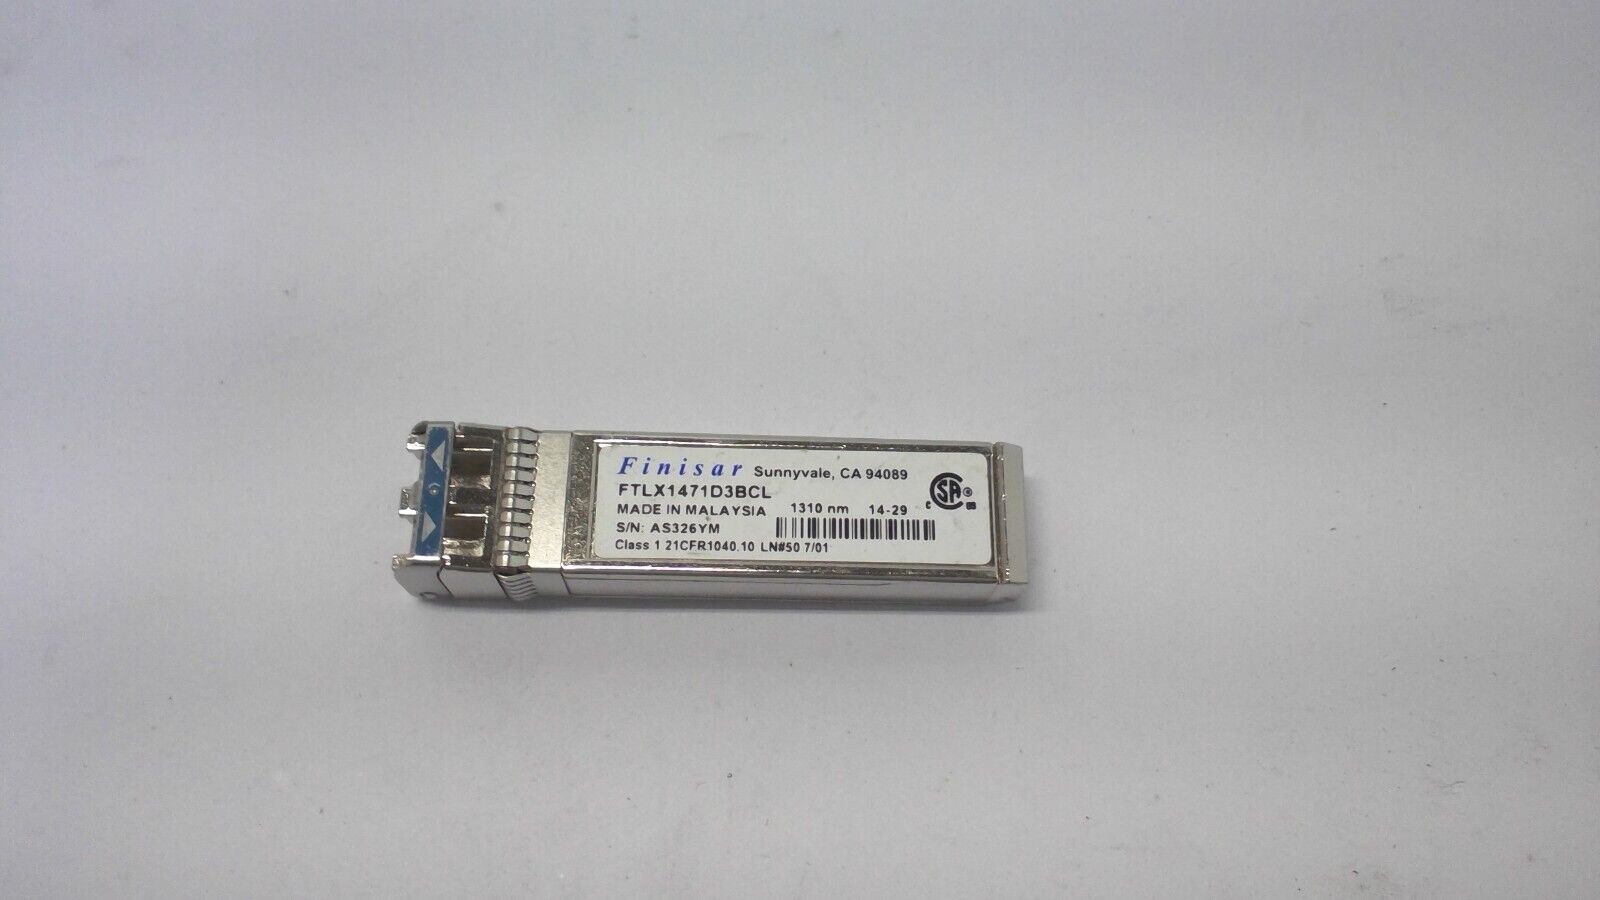 FTLX1471D3BCL Finisar 10Gb/s 10km 1310nm Single Mode SFP+ Transceiver